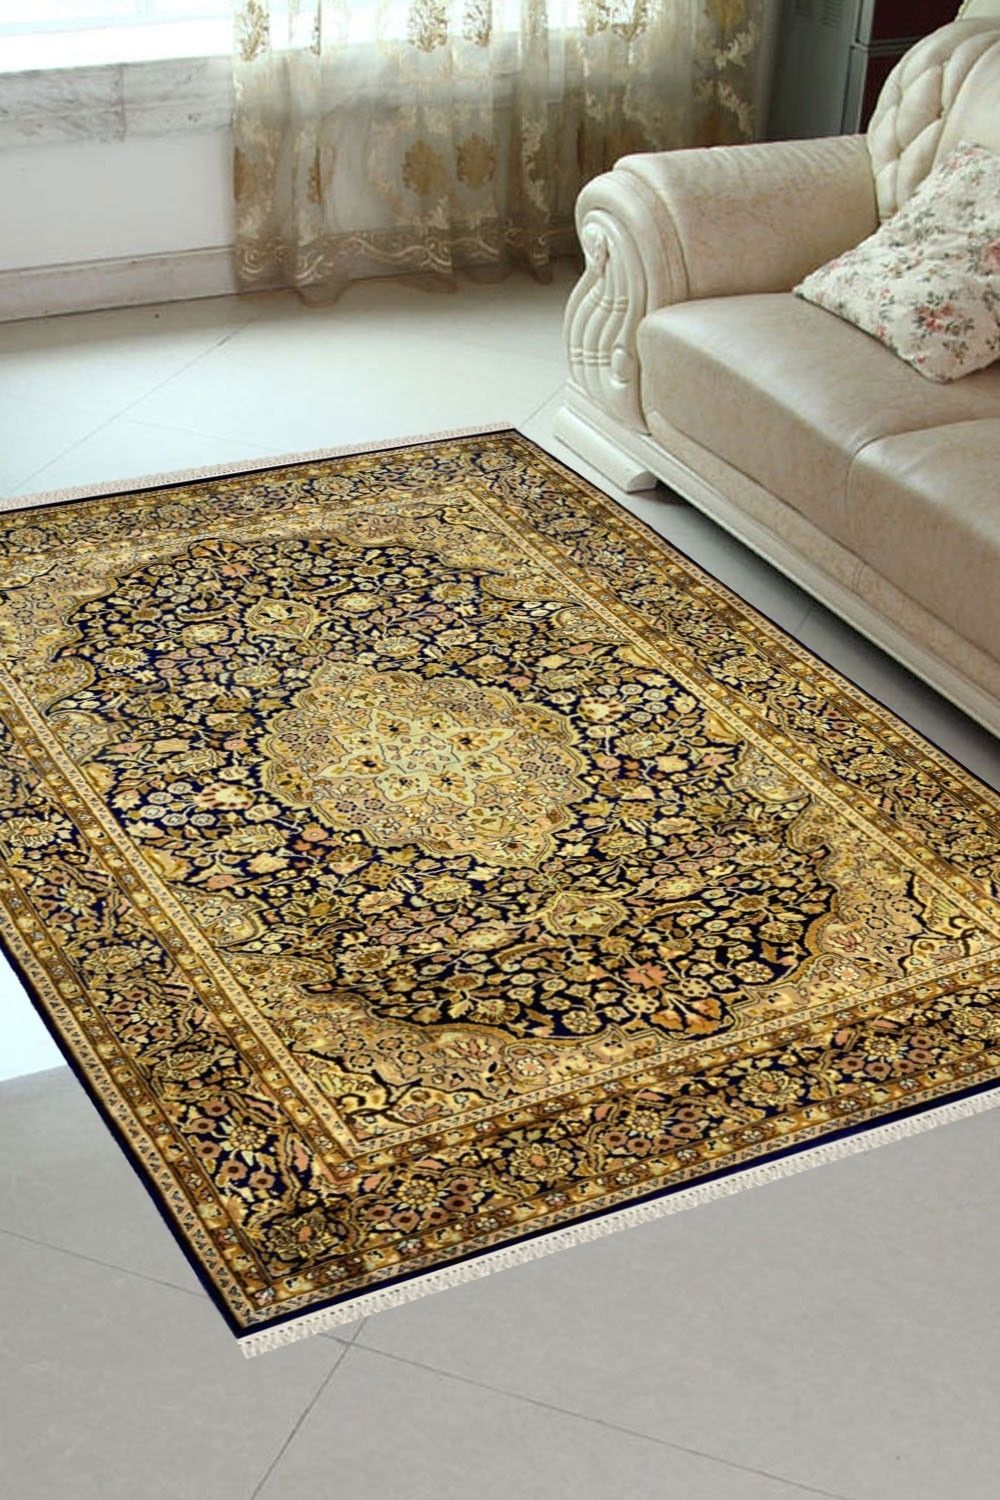 Carpet Padding China Trade,Buy China Direct From Carpet Padding